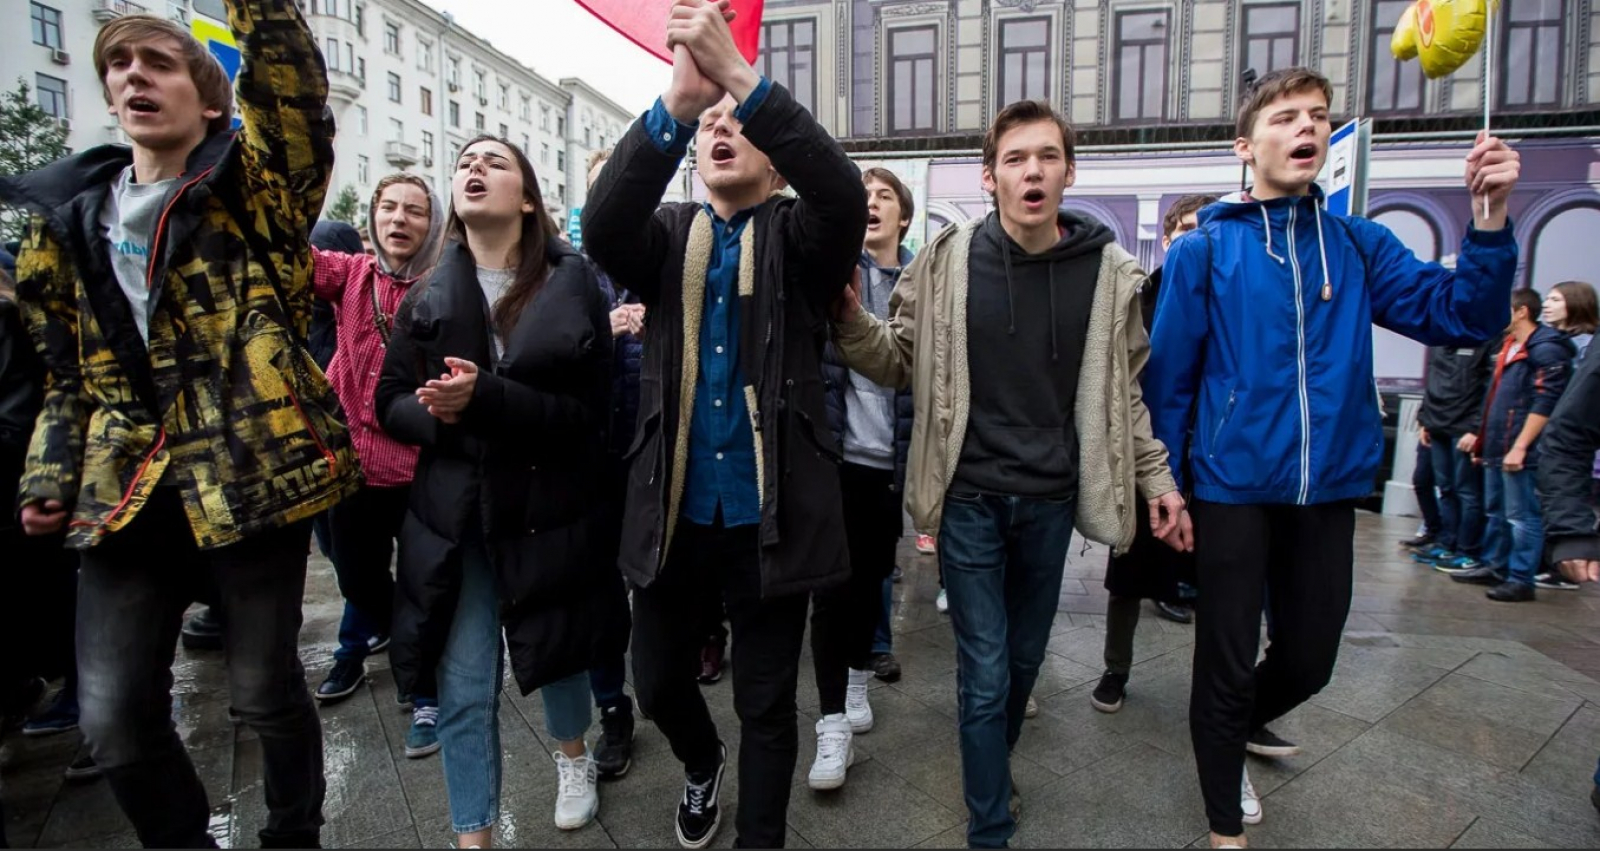 Протест против общества. Школьники на митинге. Протесты молодежи. Несовершеннолетние на митинге. Школьники на митинге Навального.